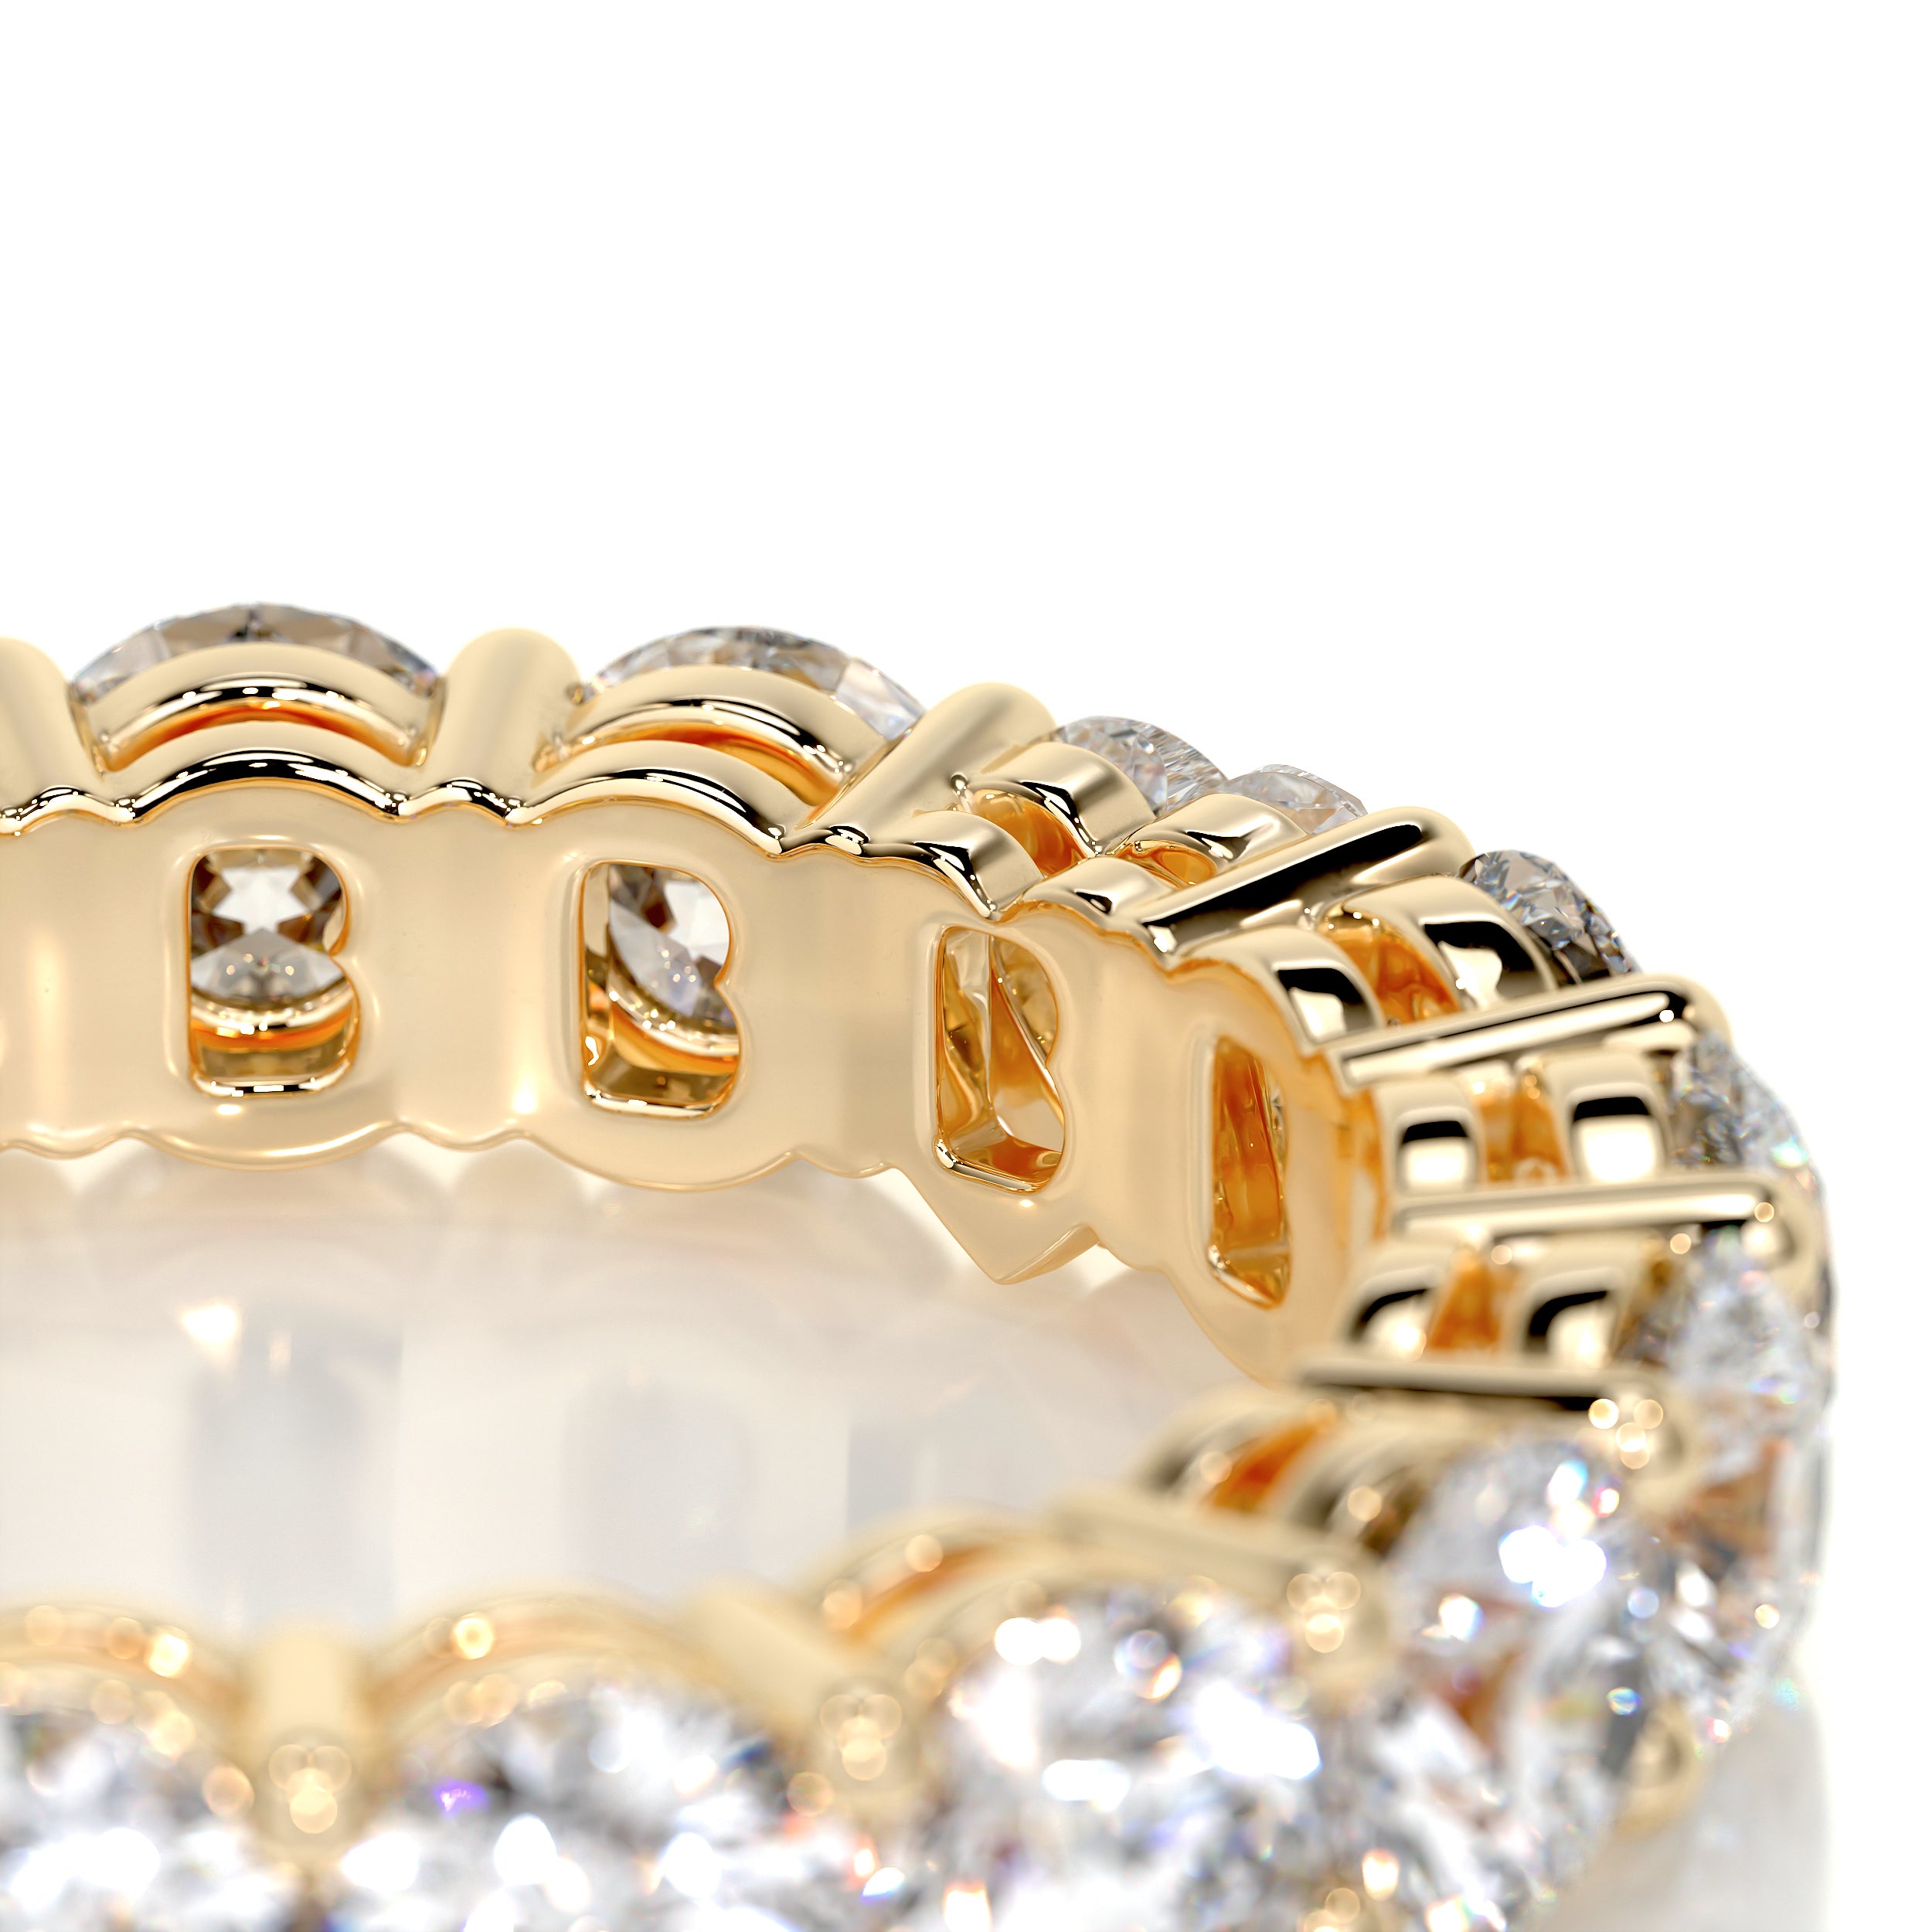 Anne Diamond Wedding Ring   (4 Carat) -18K Yellow Gold